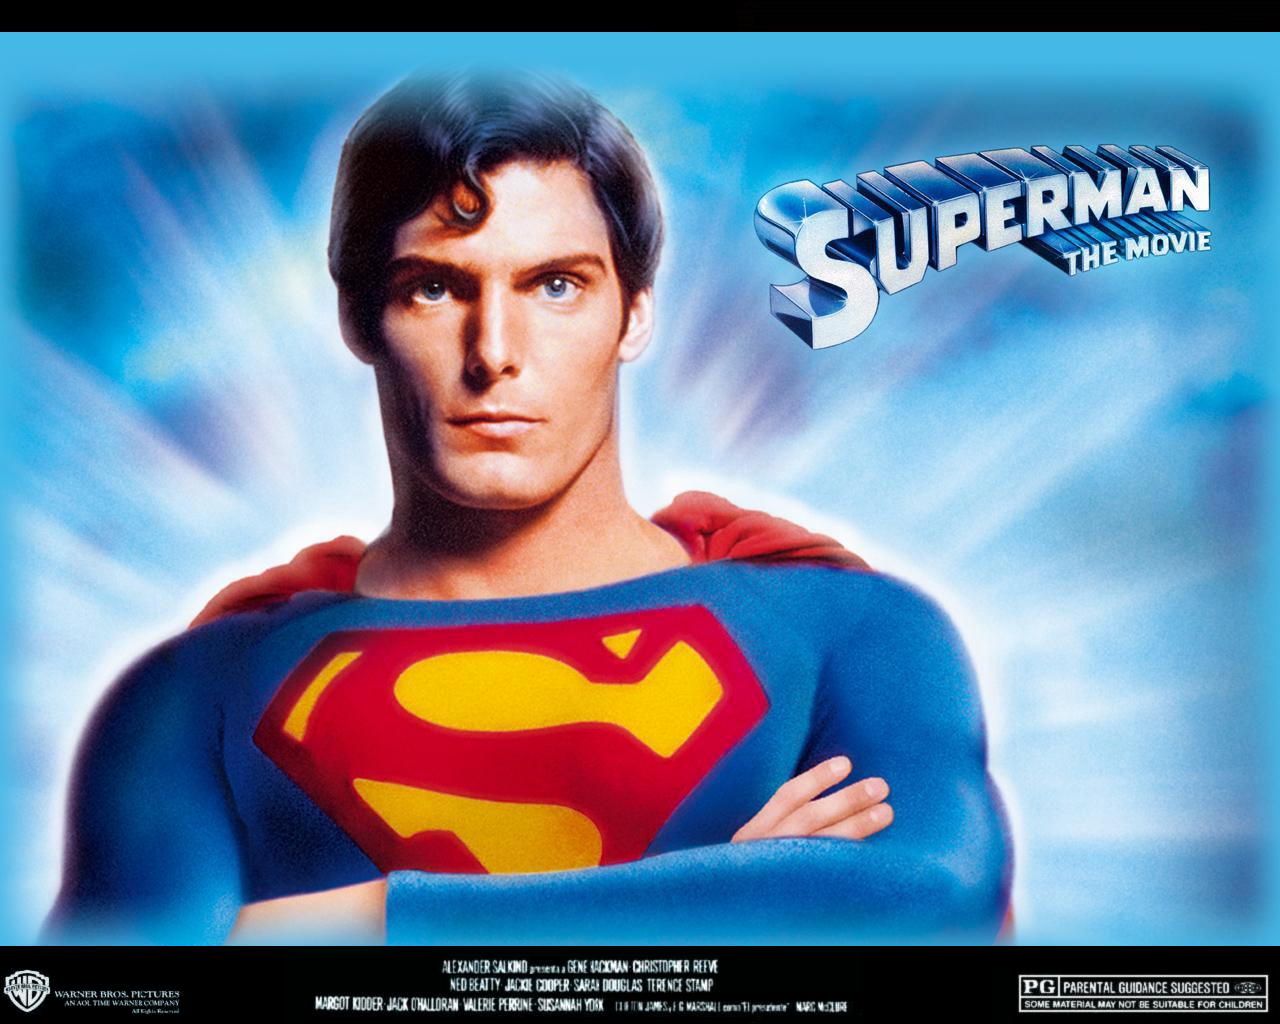 http://www.fortalezadelasoledad.com/notas/superman%20cr/Superman-The-Movie-1-1152x864.jpg